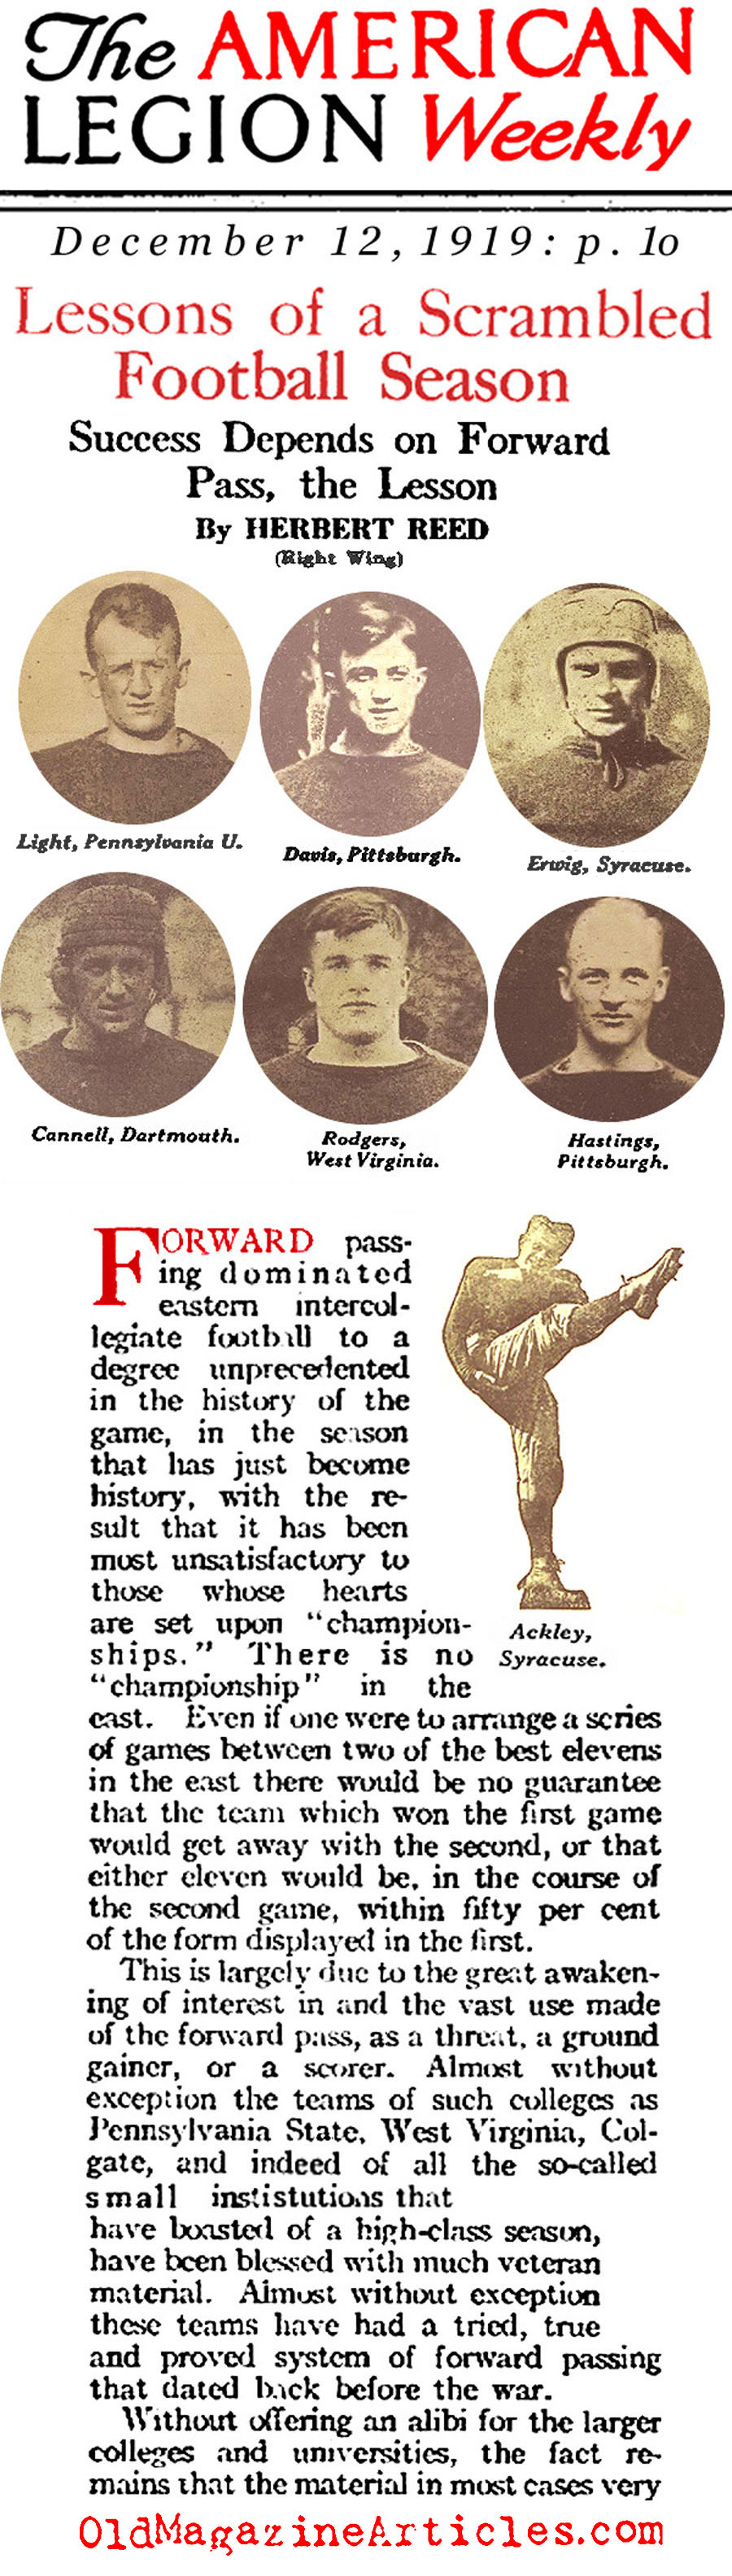 The Forward Pass Goes Mainstream (American Legion Weekly, 1919)